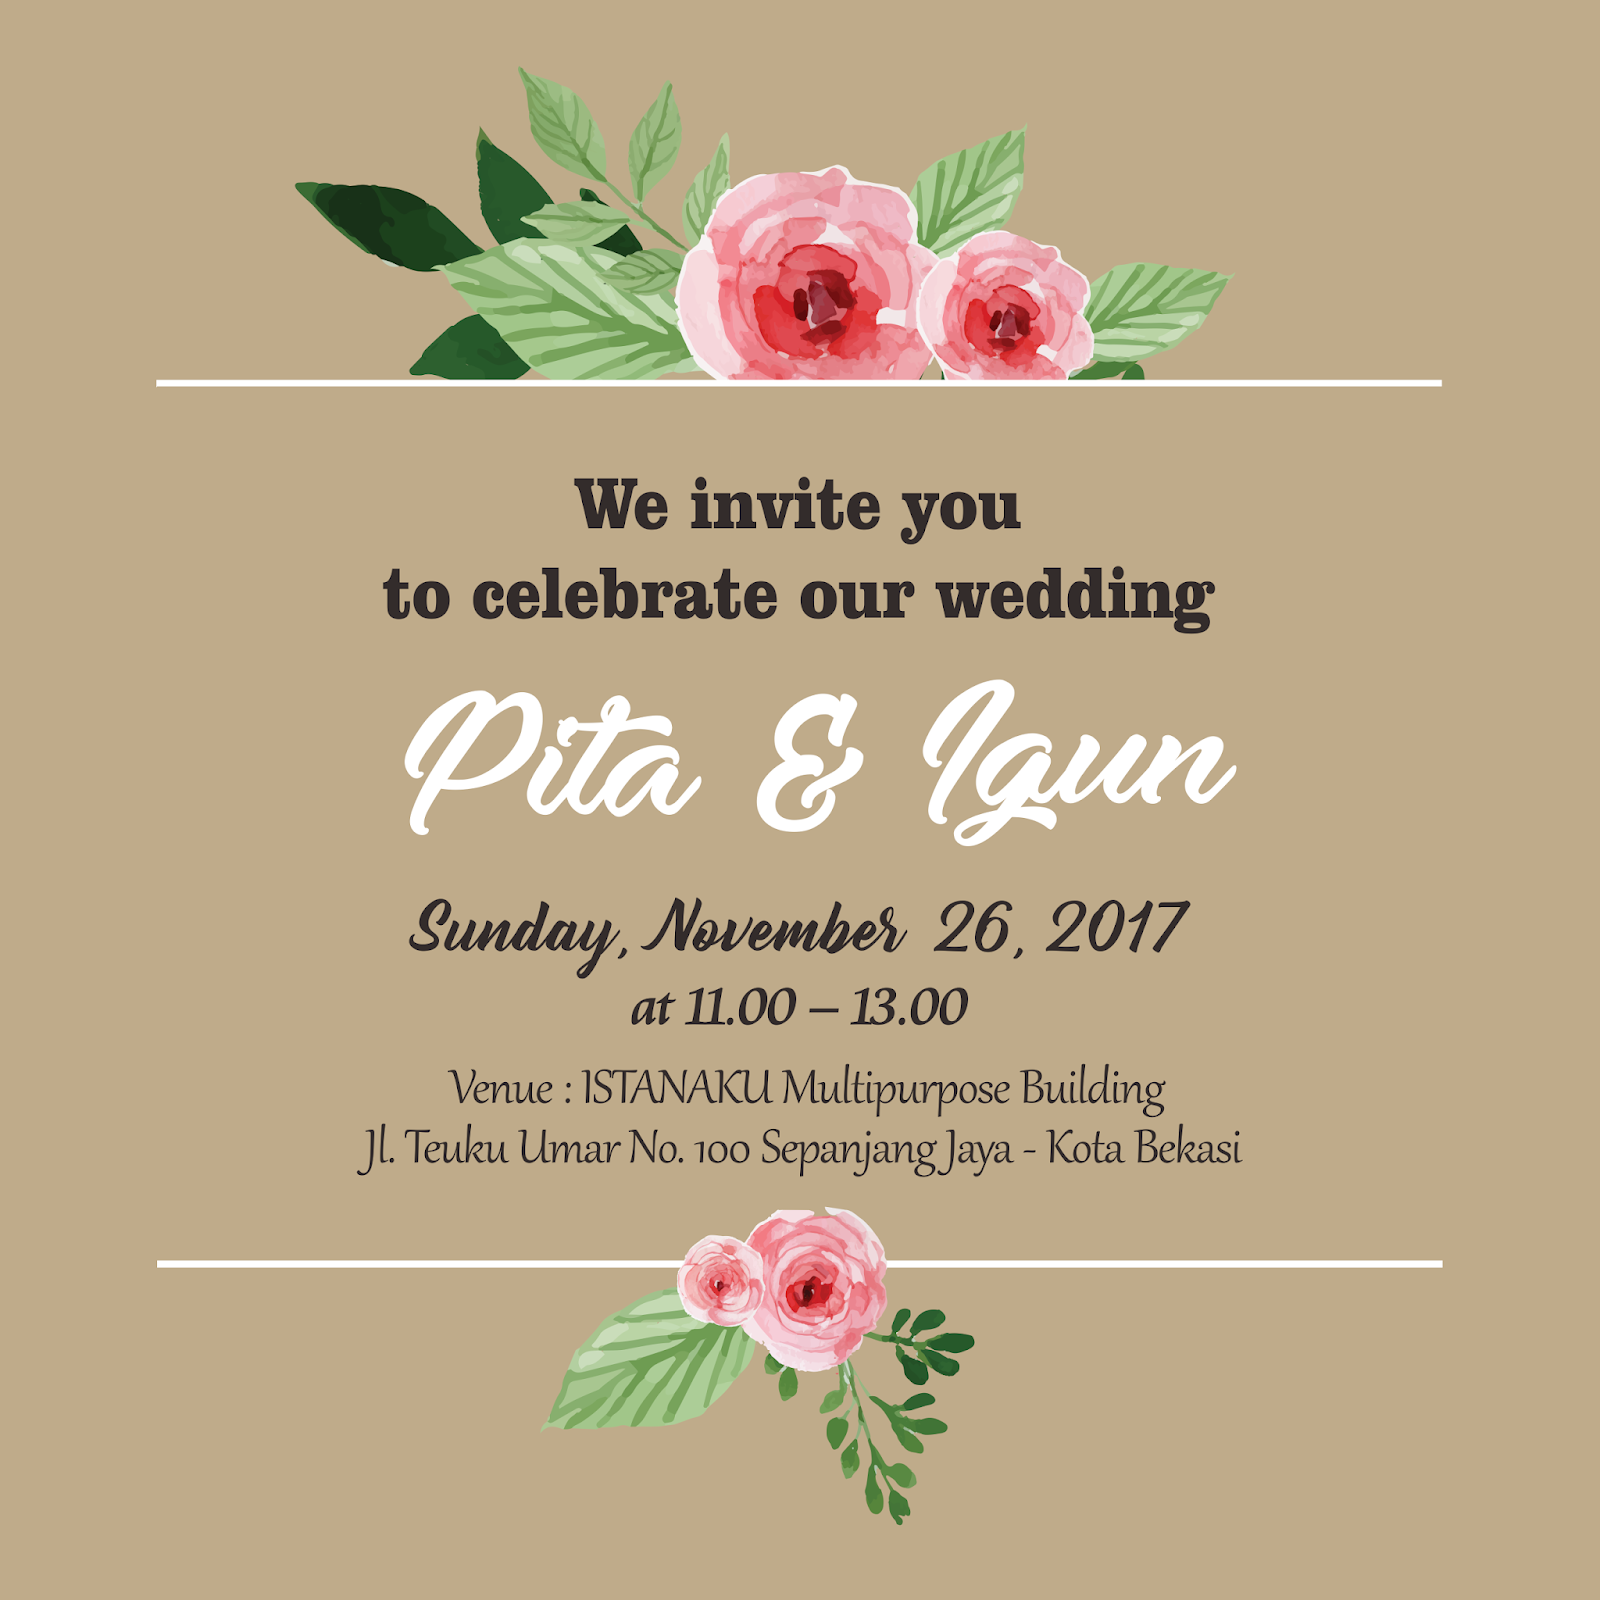 Contoh Wedding Invitation Bahasa Inggris